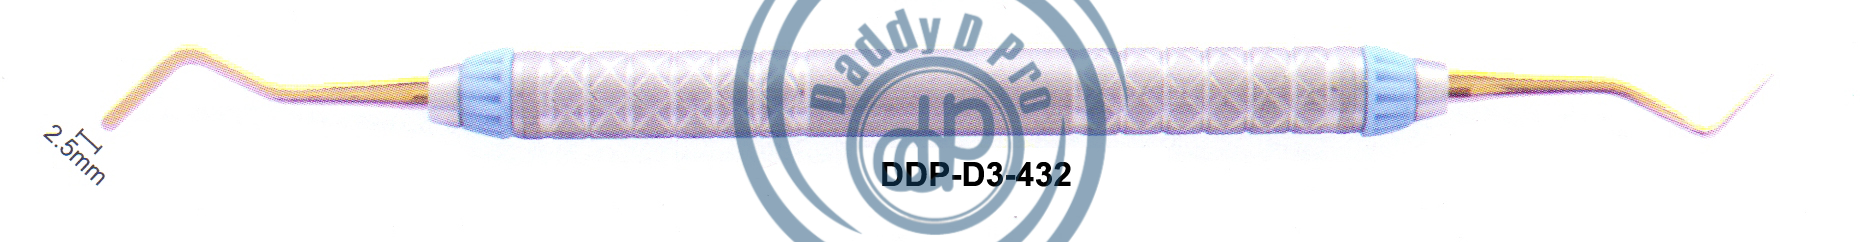 images/DDP-D3-432.png